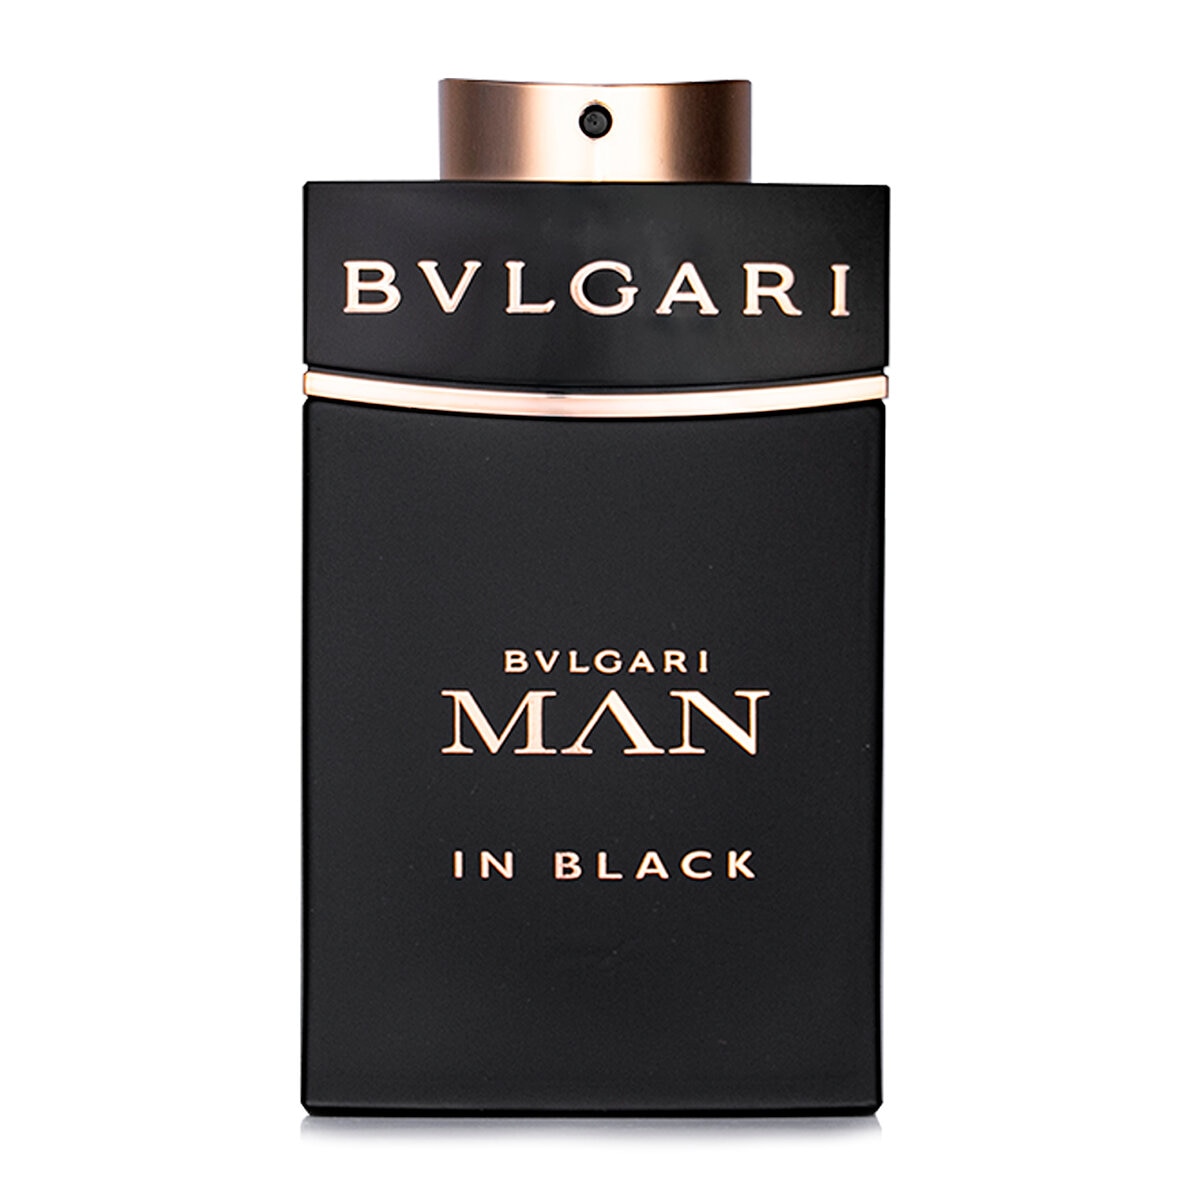 Bulgari Man in Black 100 ml